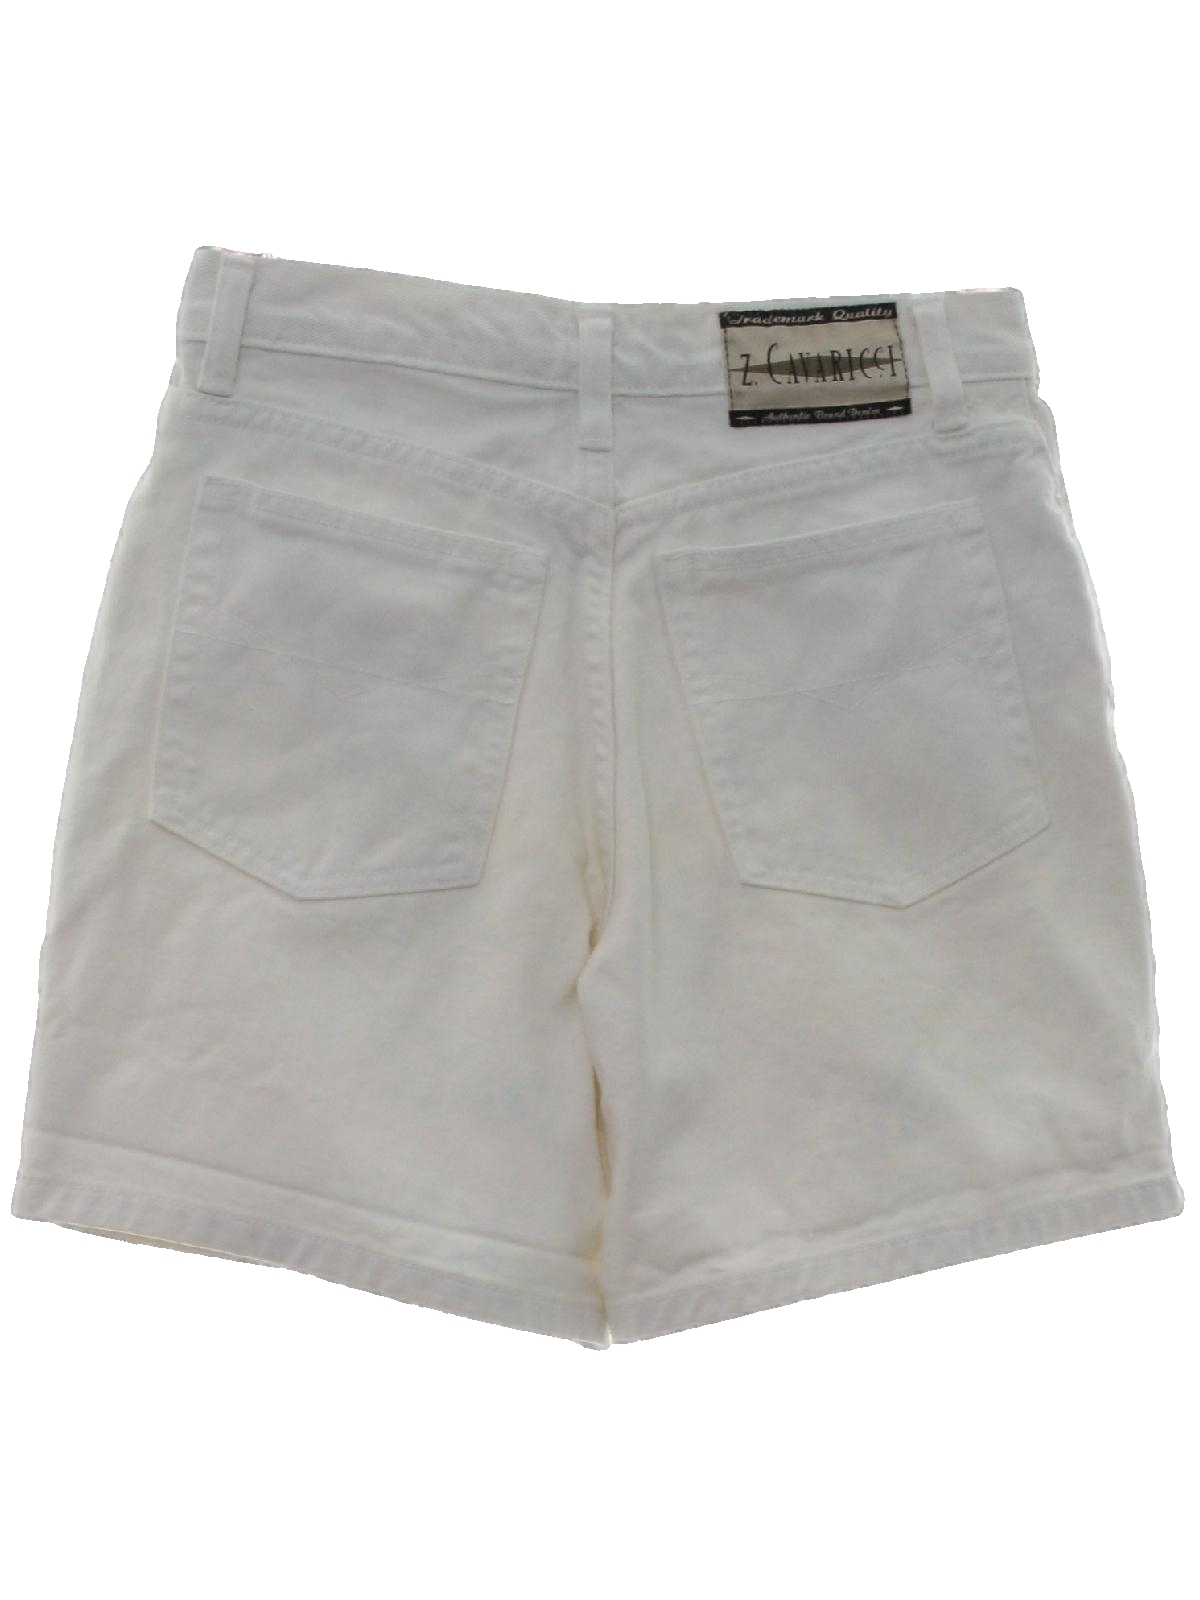 Vintage 80s Shorts: 80s -Z. Cavaricci- Womens white background cotton ...